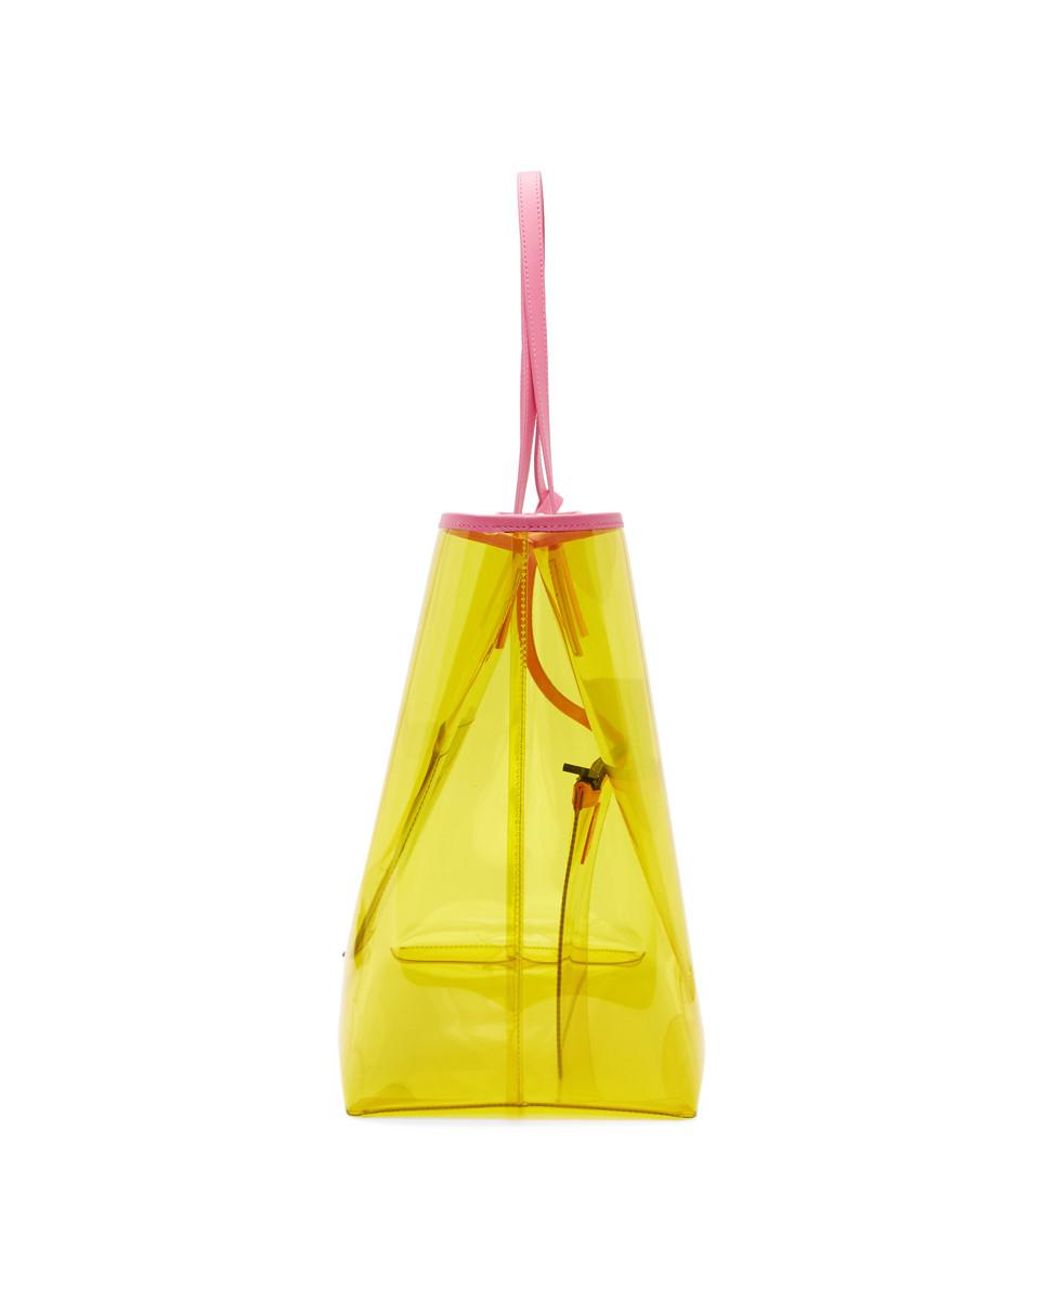 Versace Yellow Logo Pvc Tote Bag | Lyst Canada